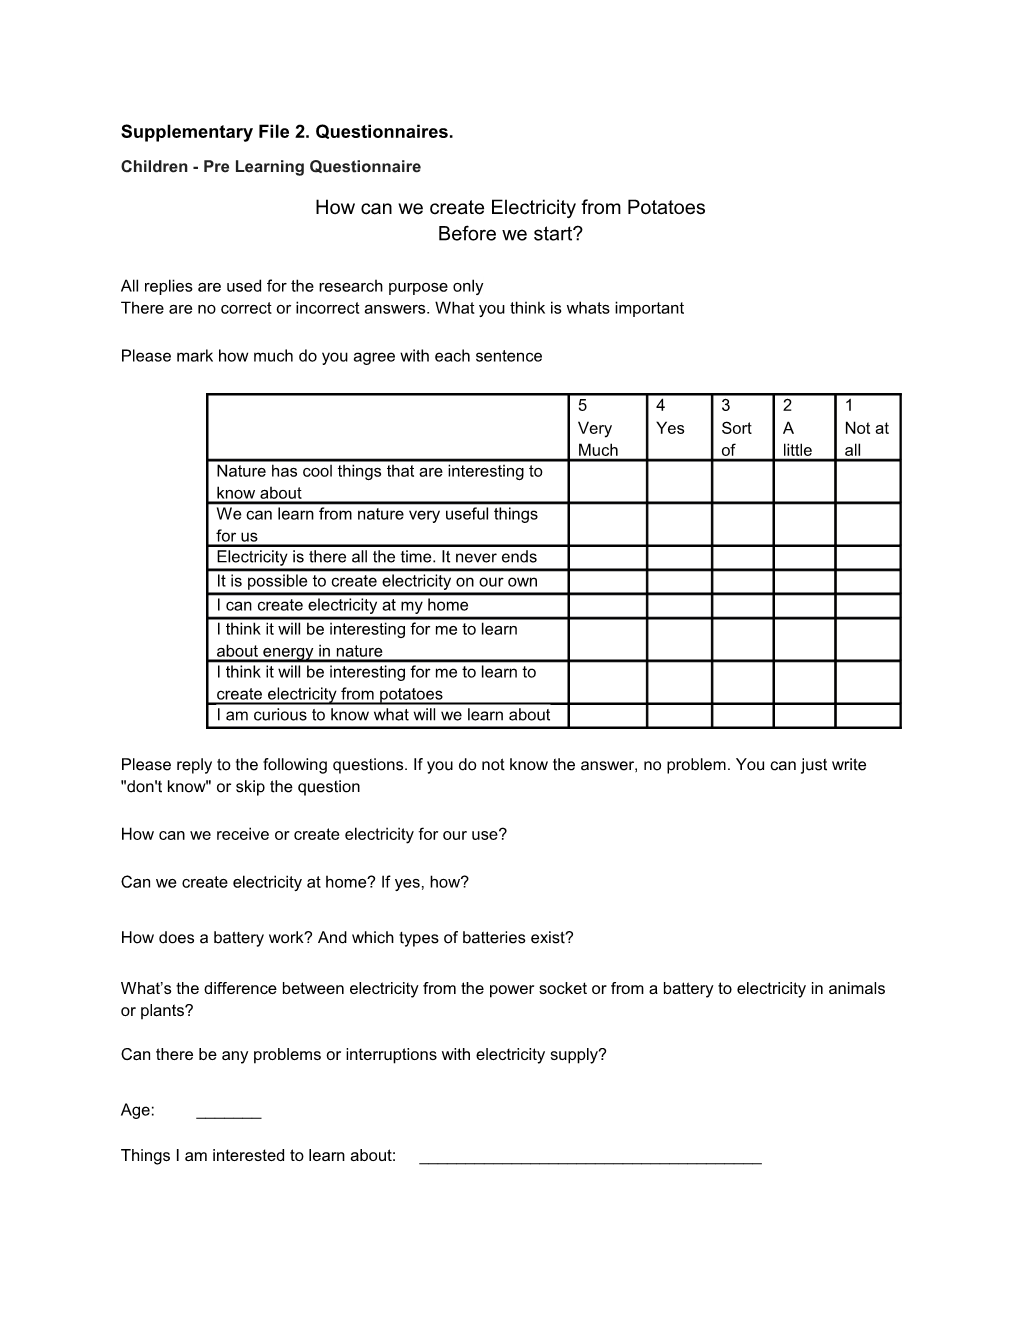 Children - Pre Learning Questionnaire